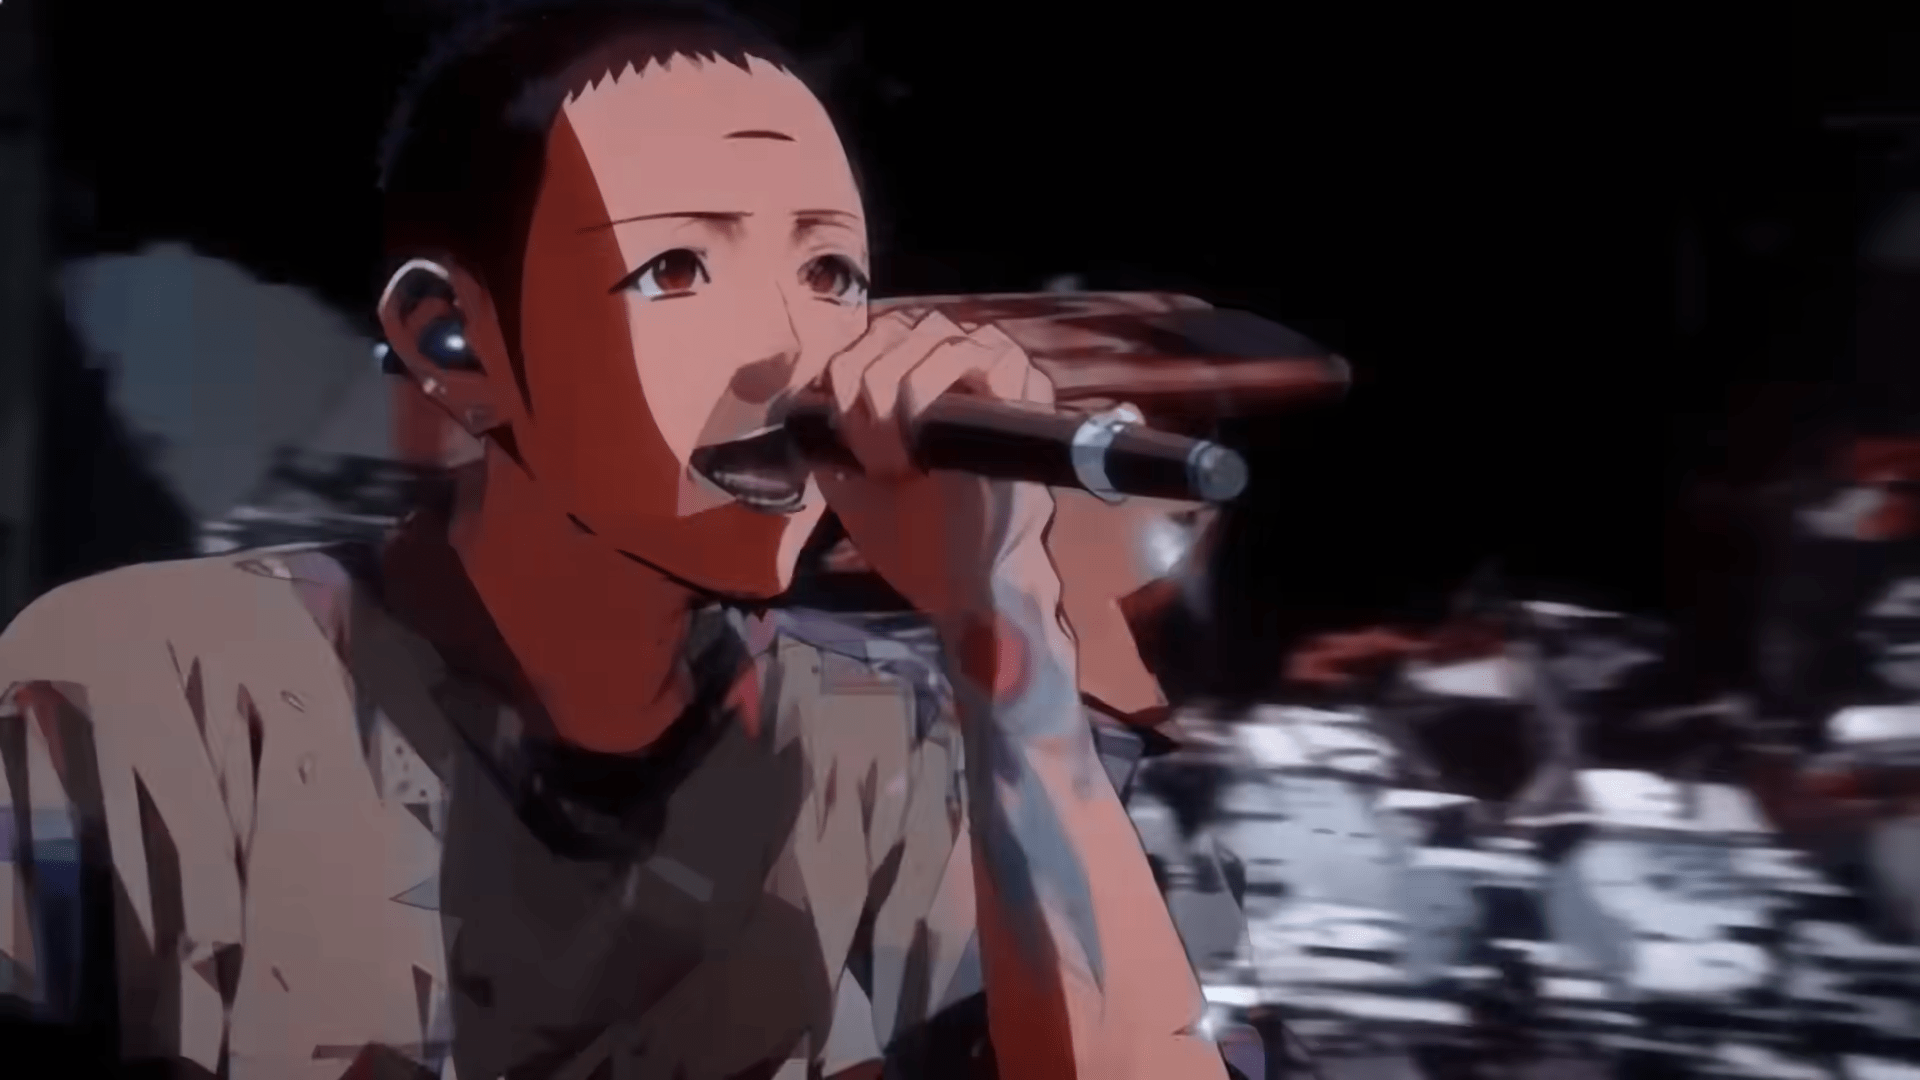 Kaiber AI is the AI animation tool behind Linkin Park’s “Lost”